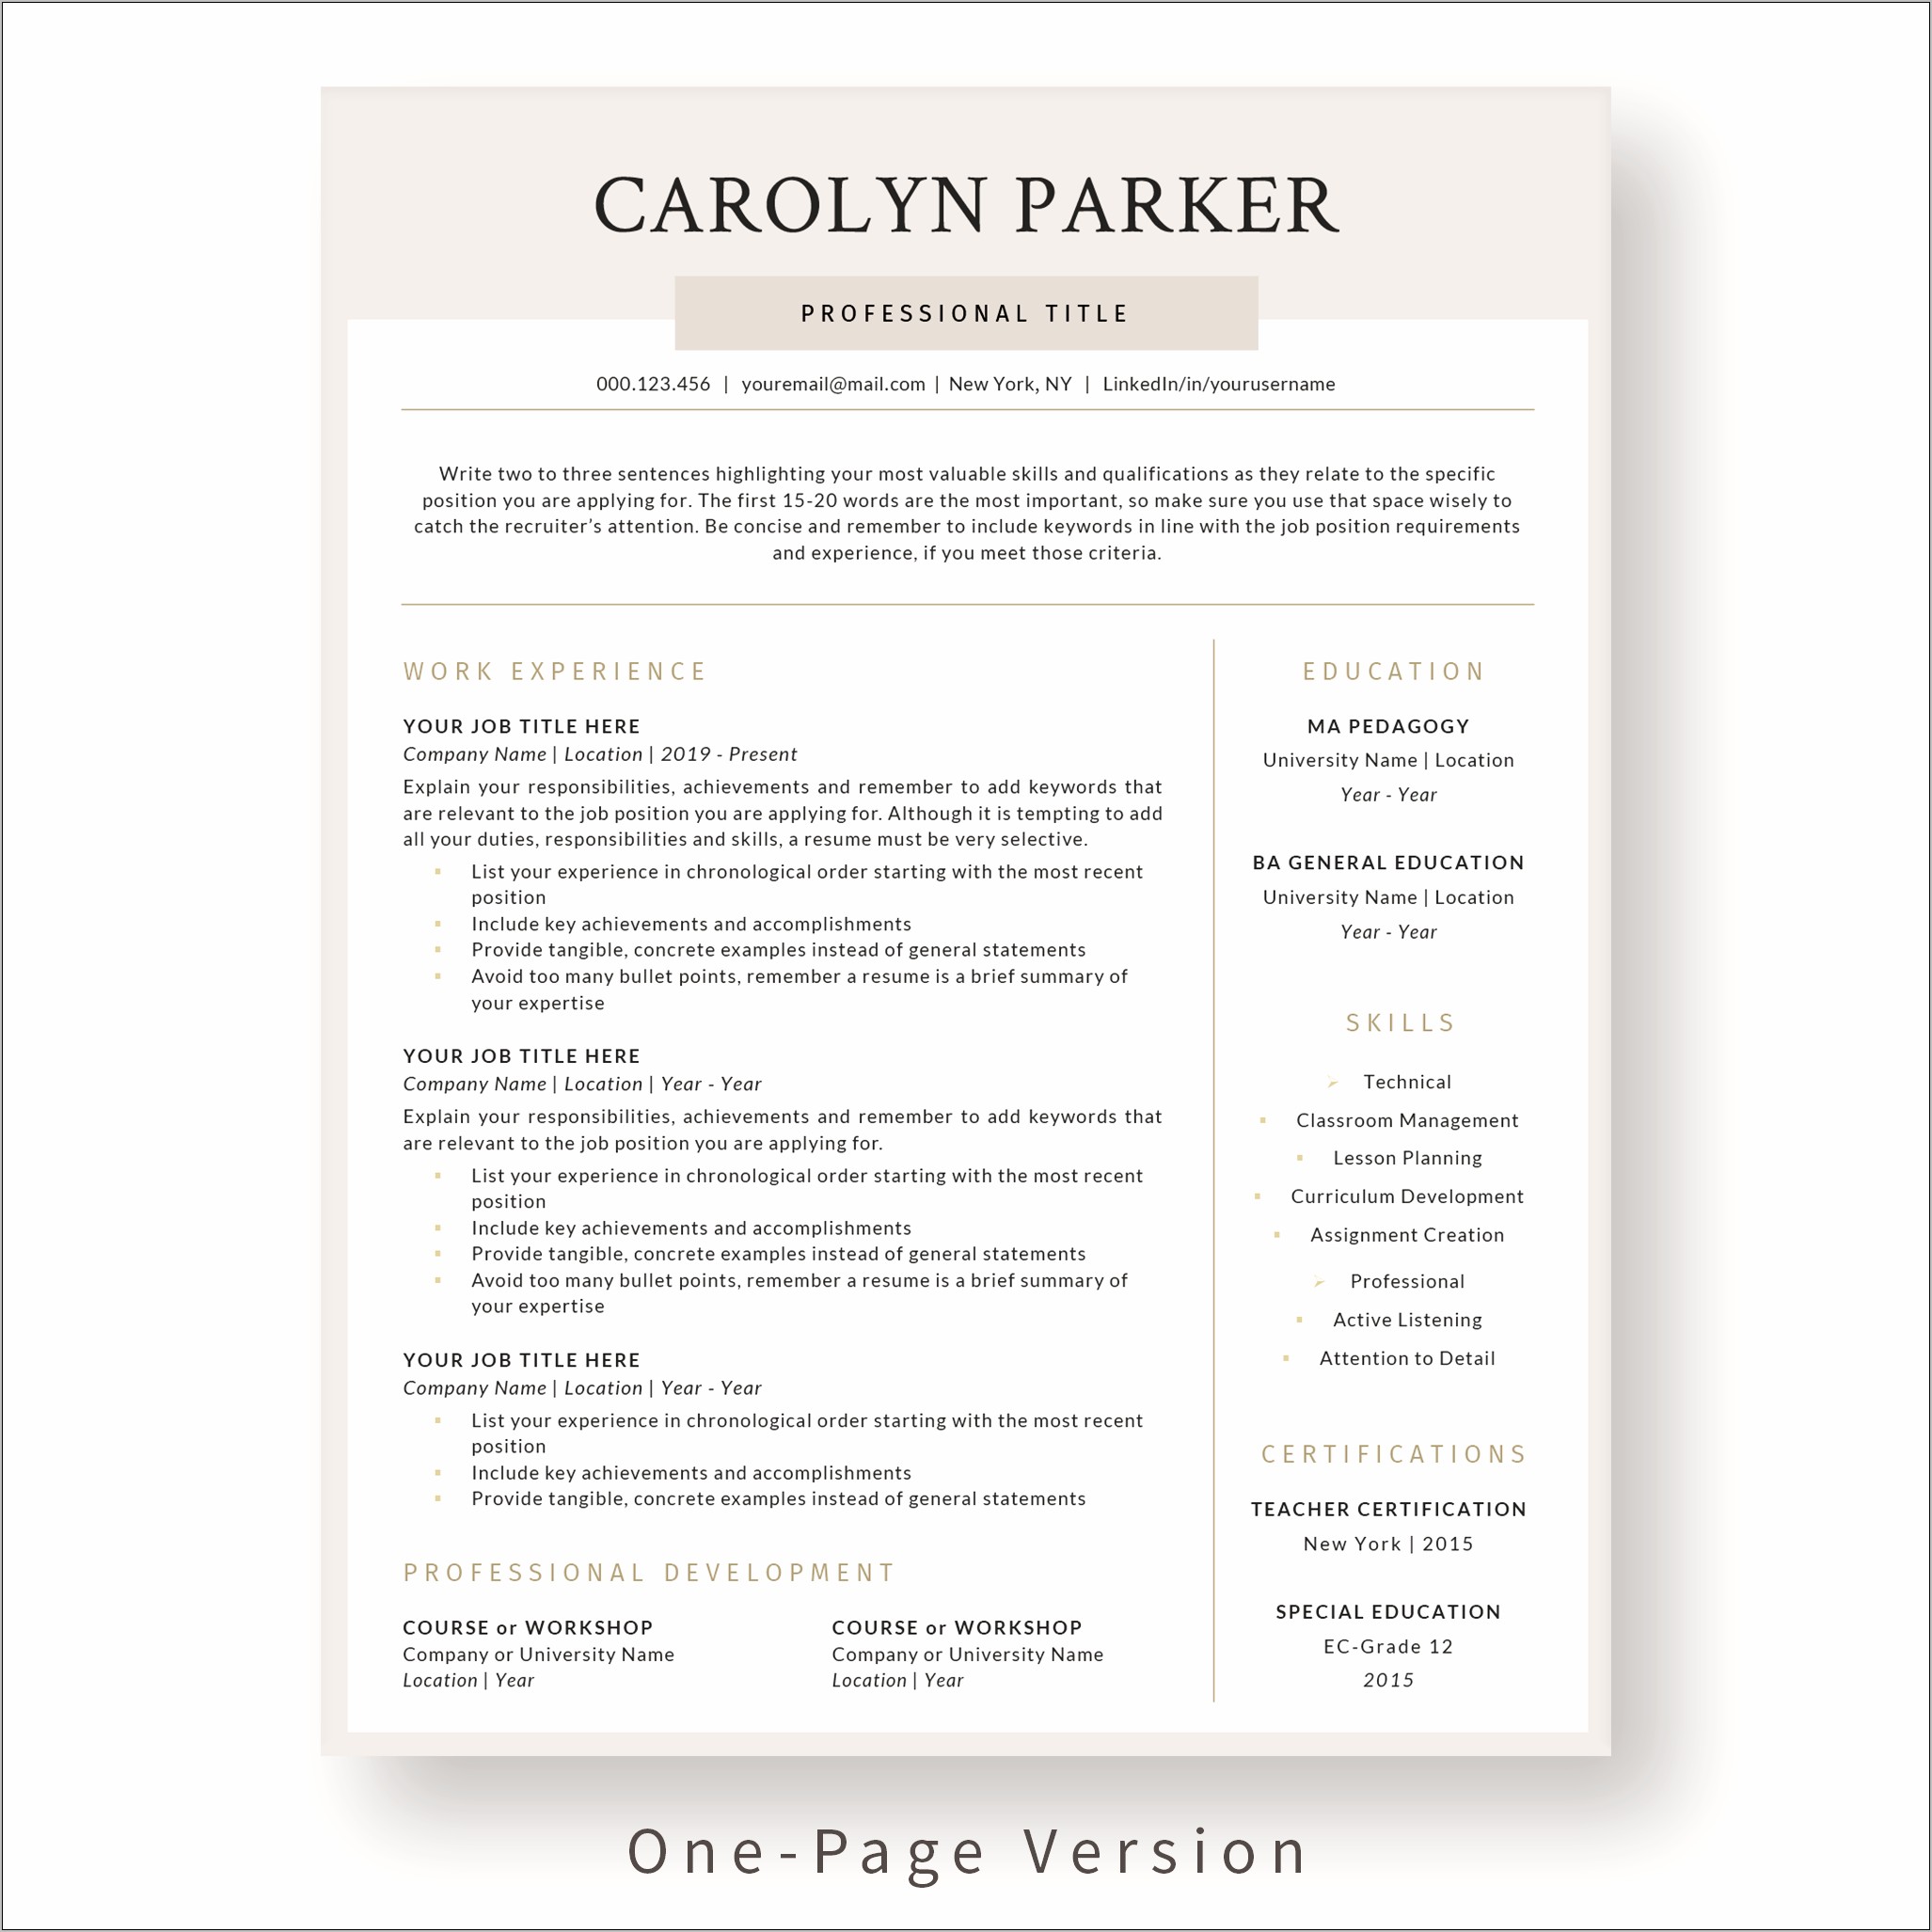 Sample Professional Resume Word Document